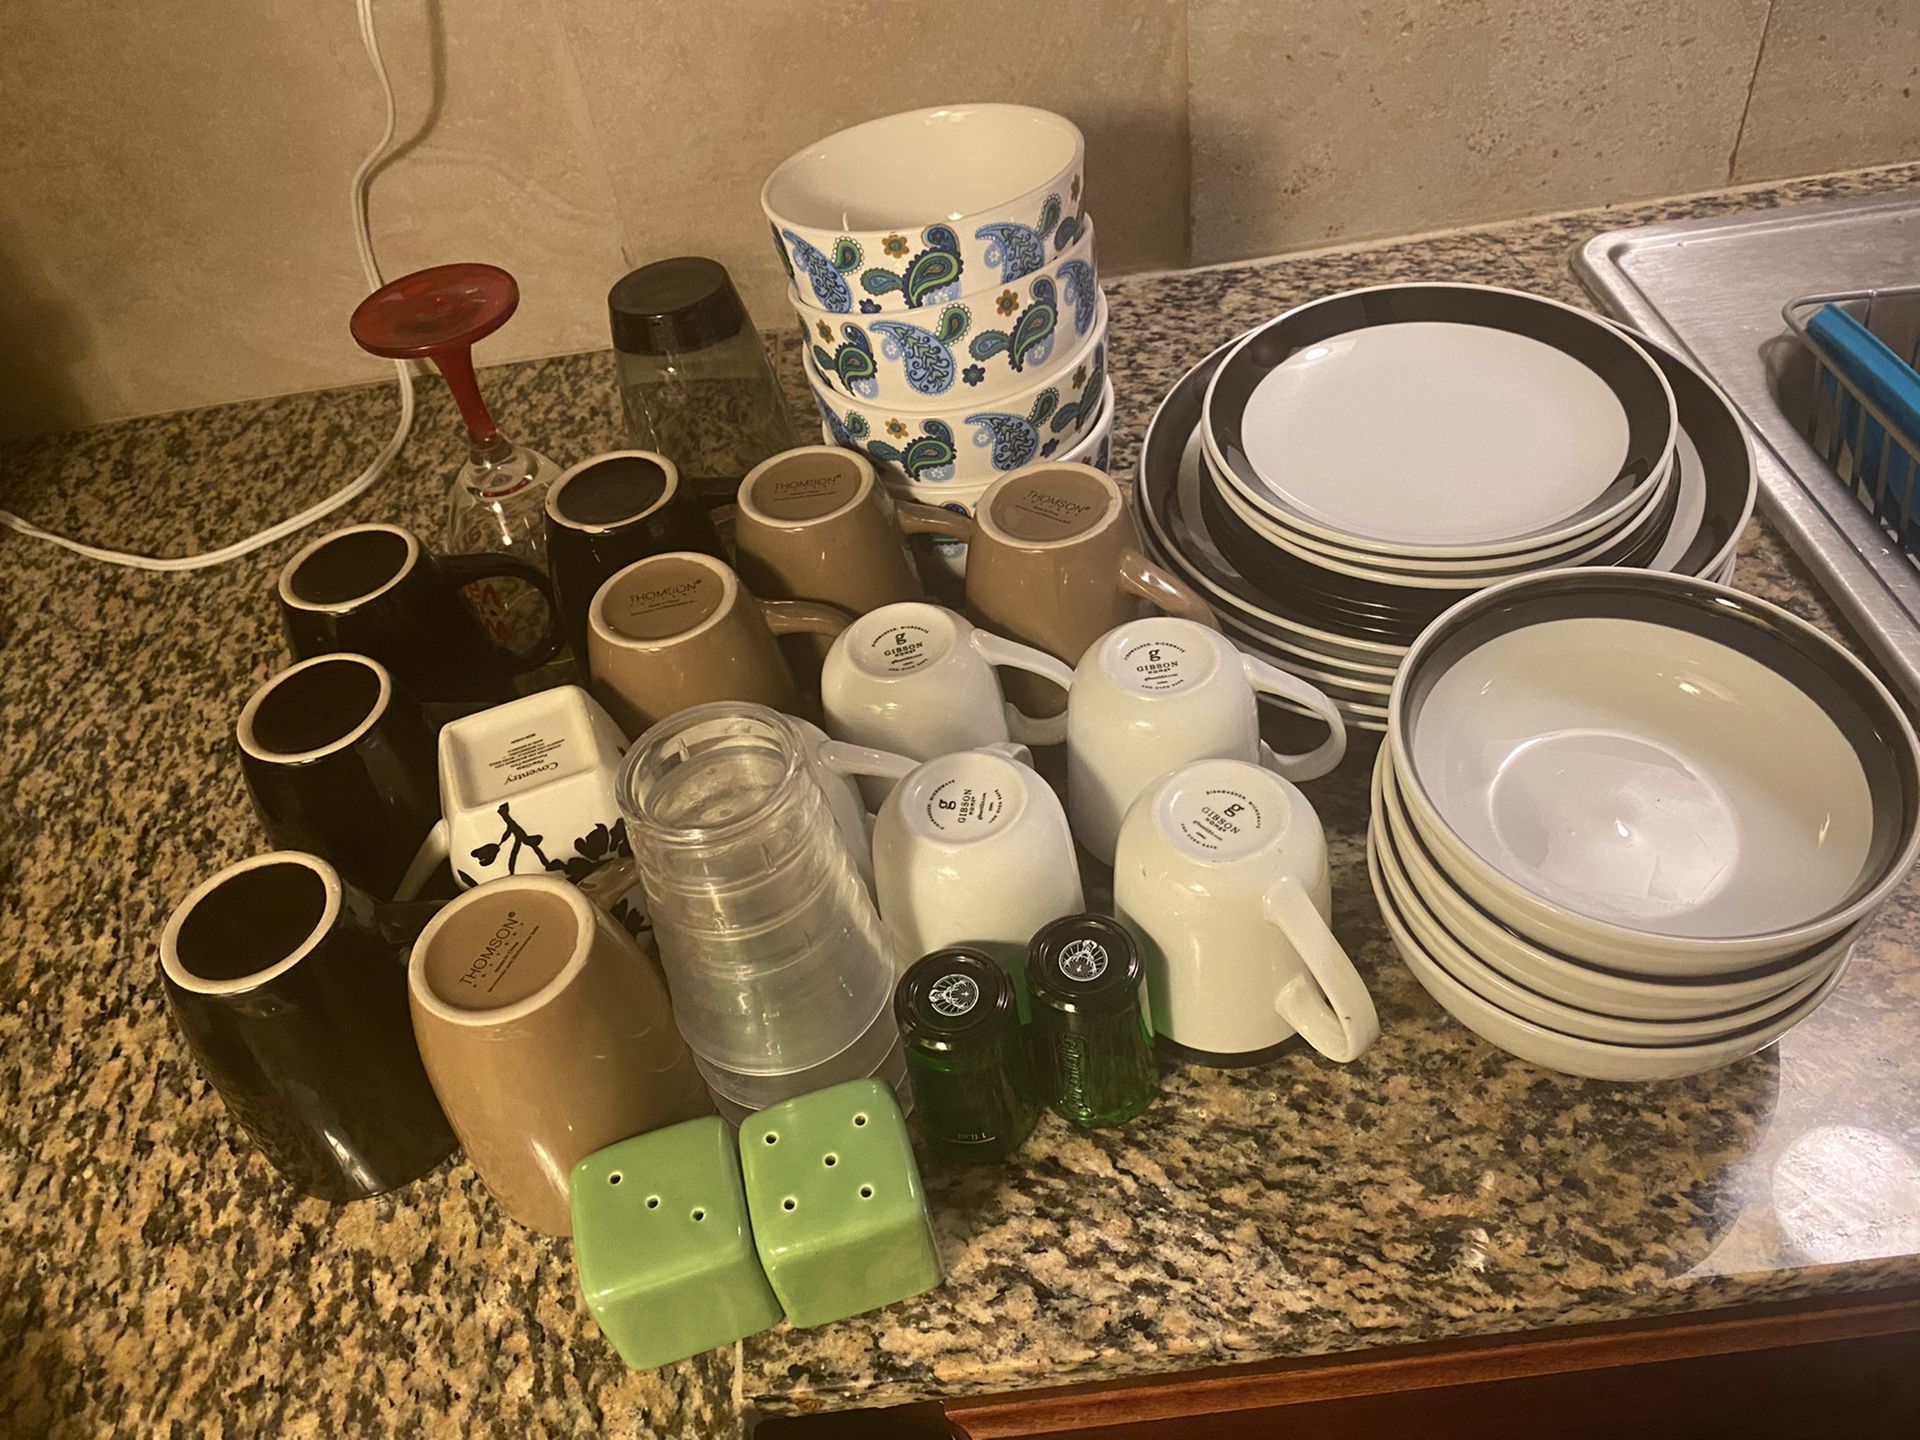 Utensils, cups, plates, bowls, shot glasses and salt & pepper shaker for sale